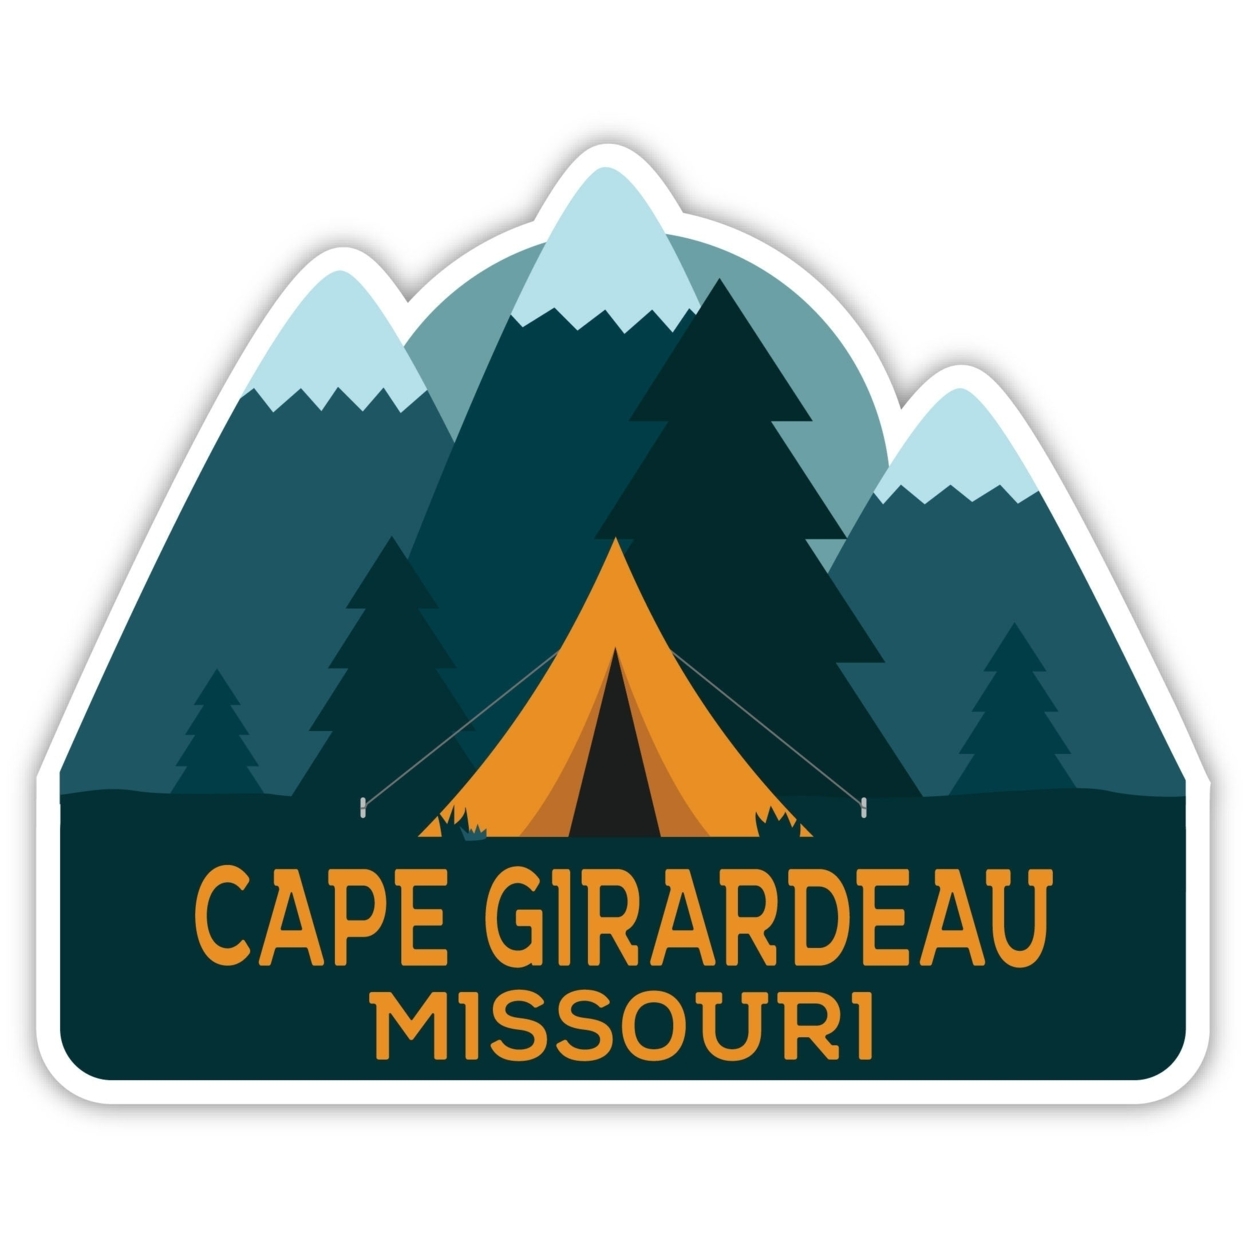 Cape Girardeau Missouri Souvenir Decorative Stickers (Choose Theme And Size) - 4-Pack, 12-Inch, Tent